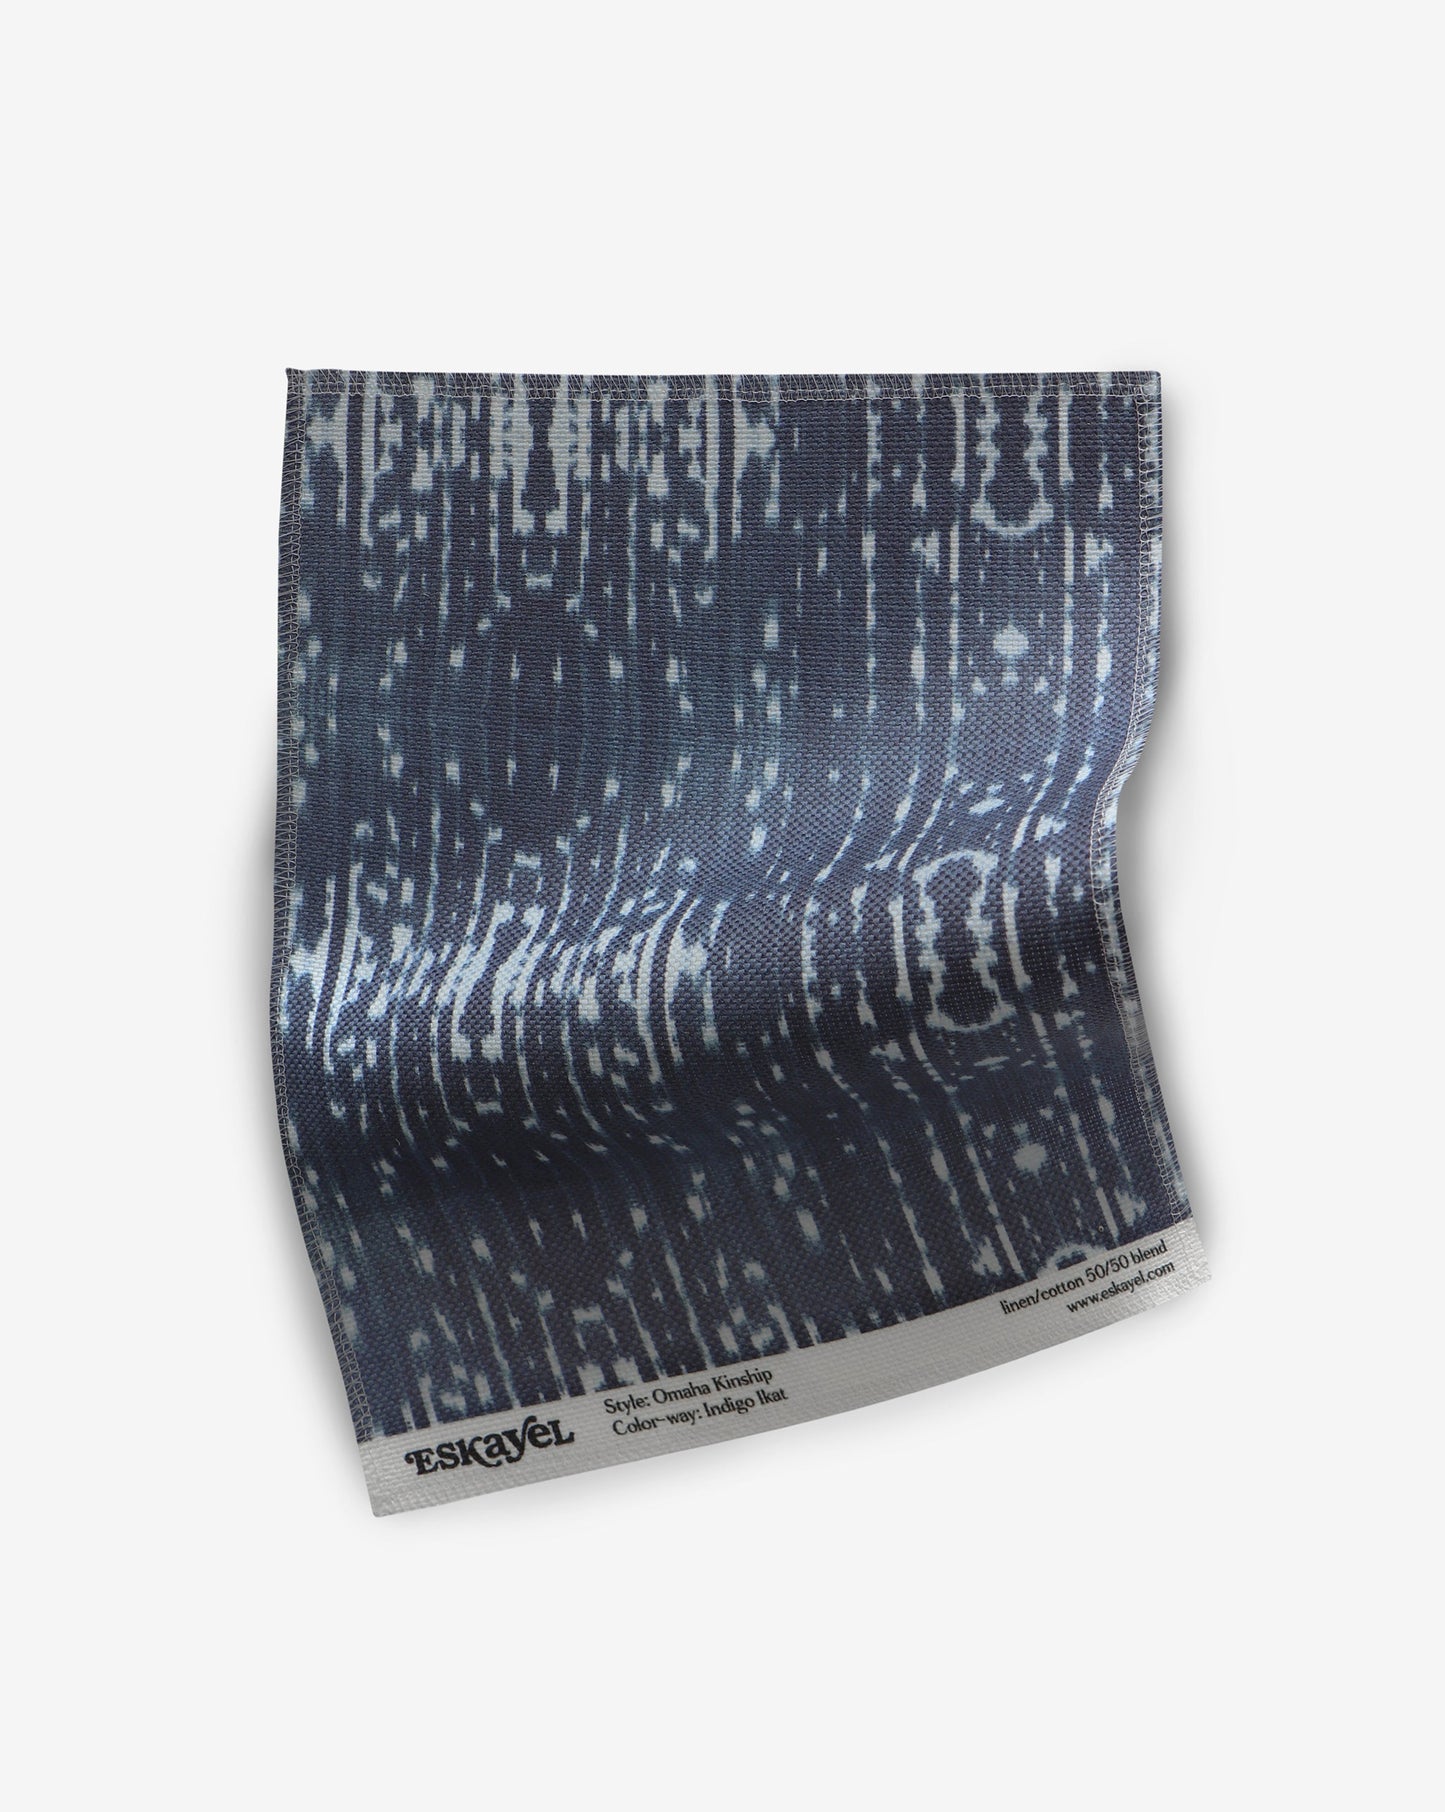 Omaha Kinship Fabric||Indigo Ikat